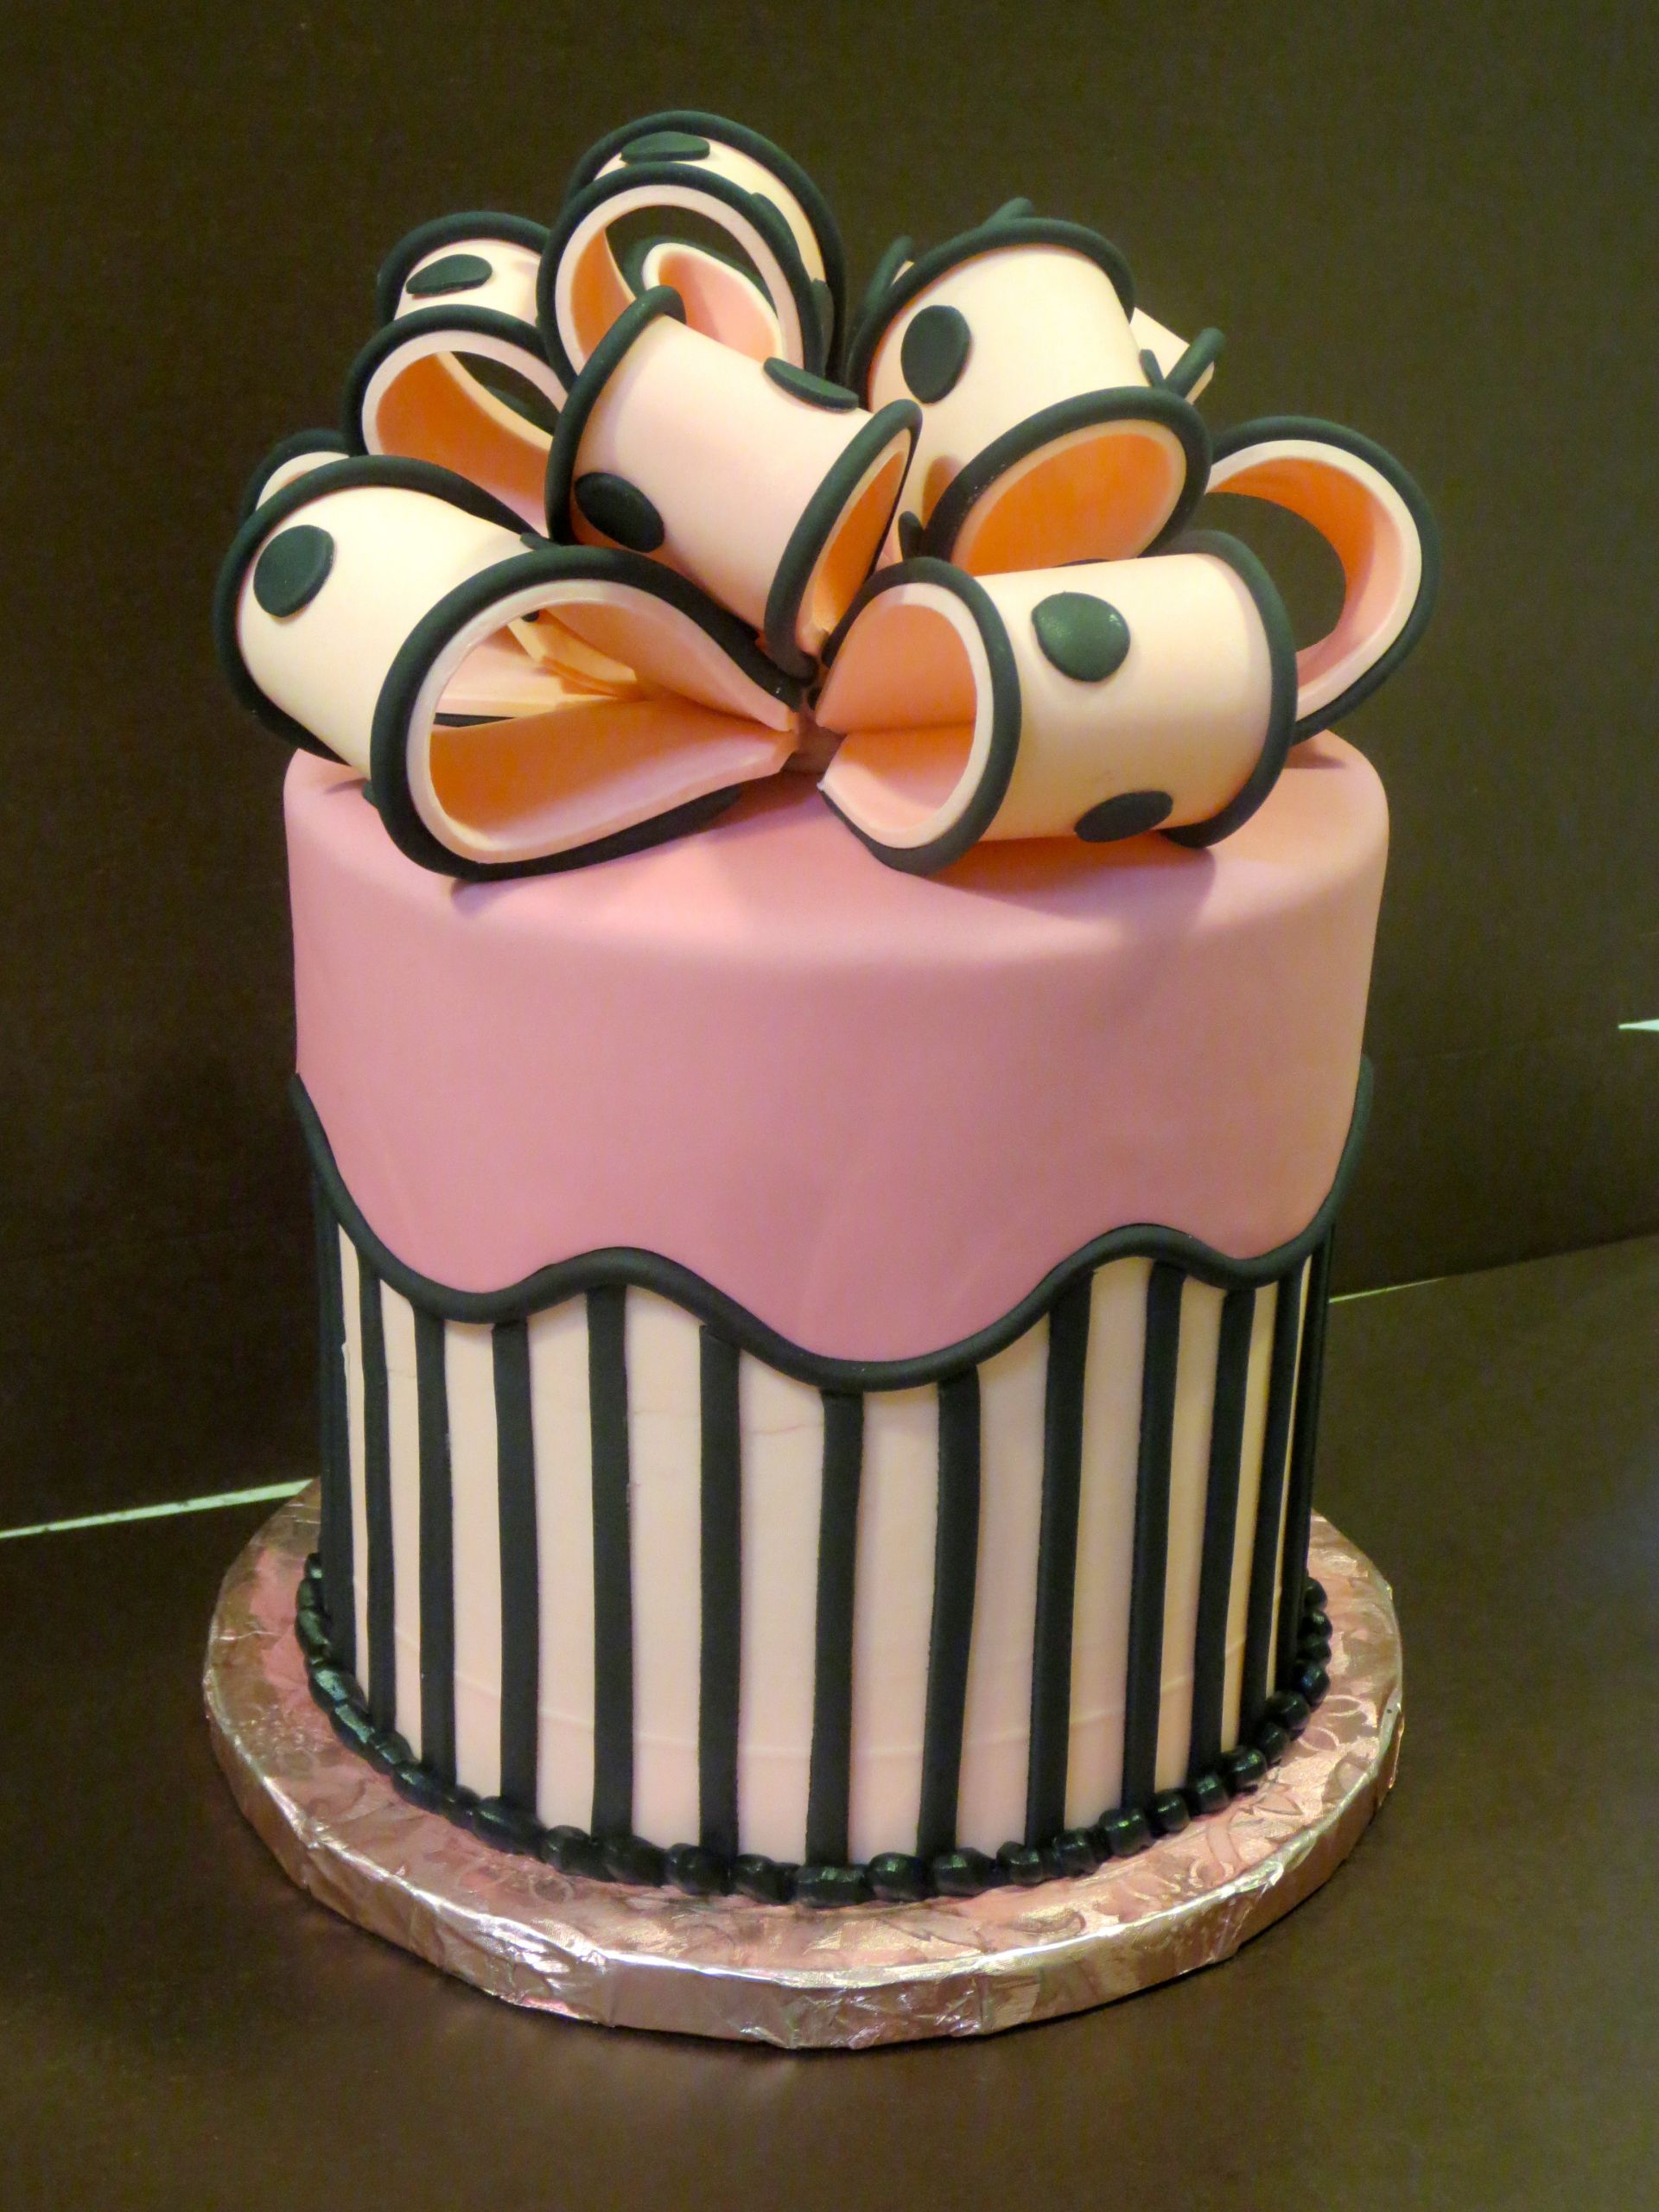 Cool Birthday Cakes
 Buzz Lightyear Cake and Elegant Birthday Cake